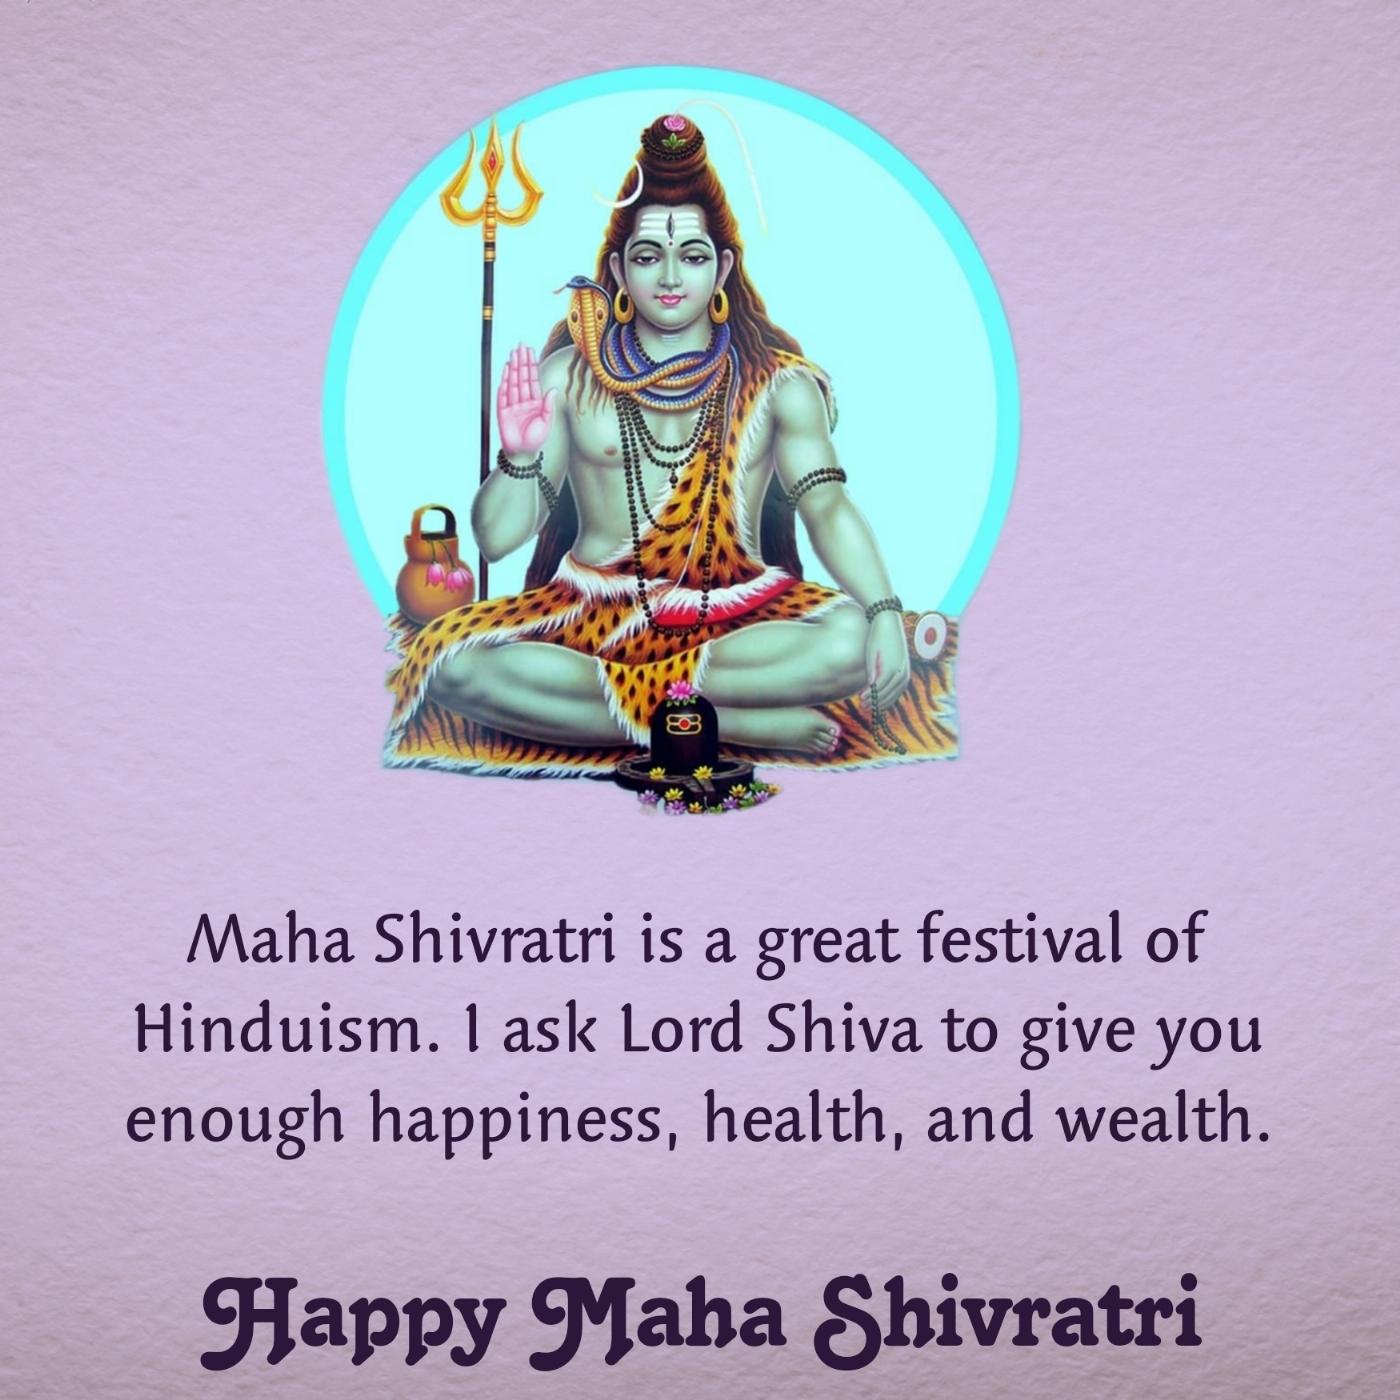 Maha Shivratri is a great festival of Hinduism